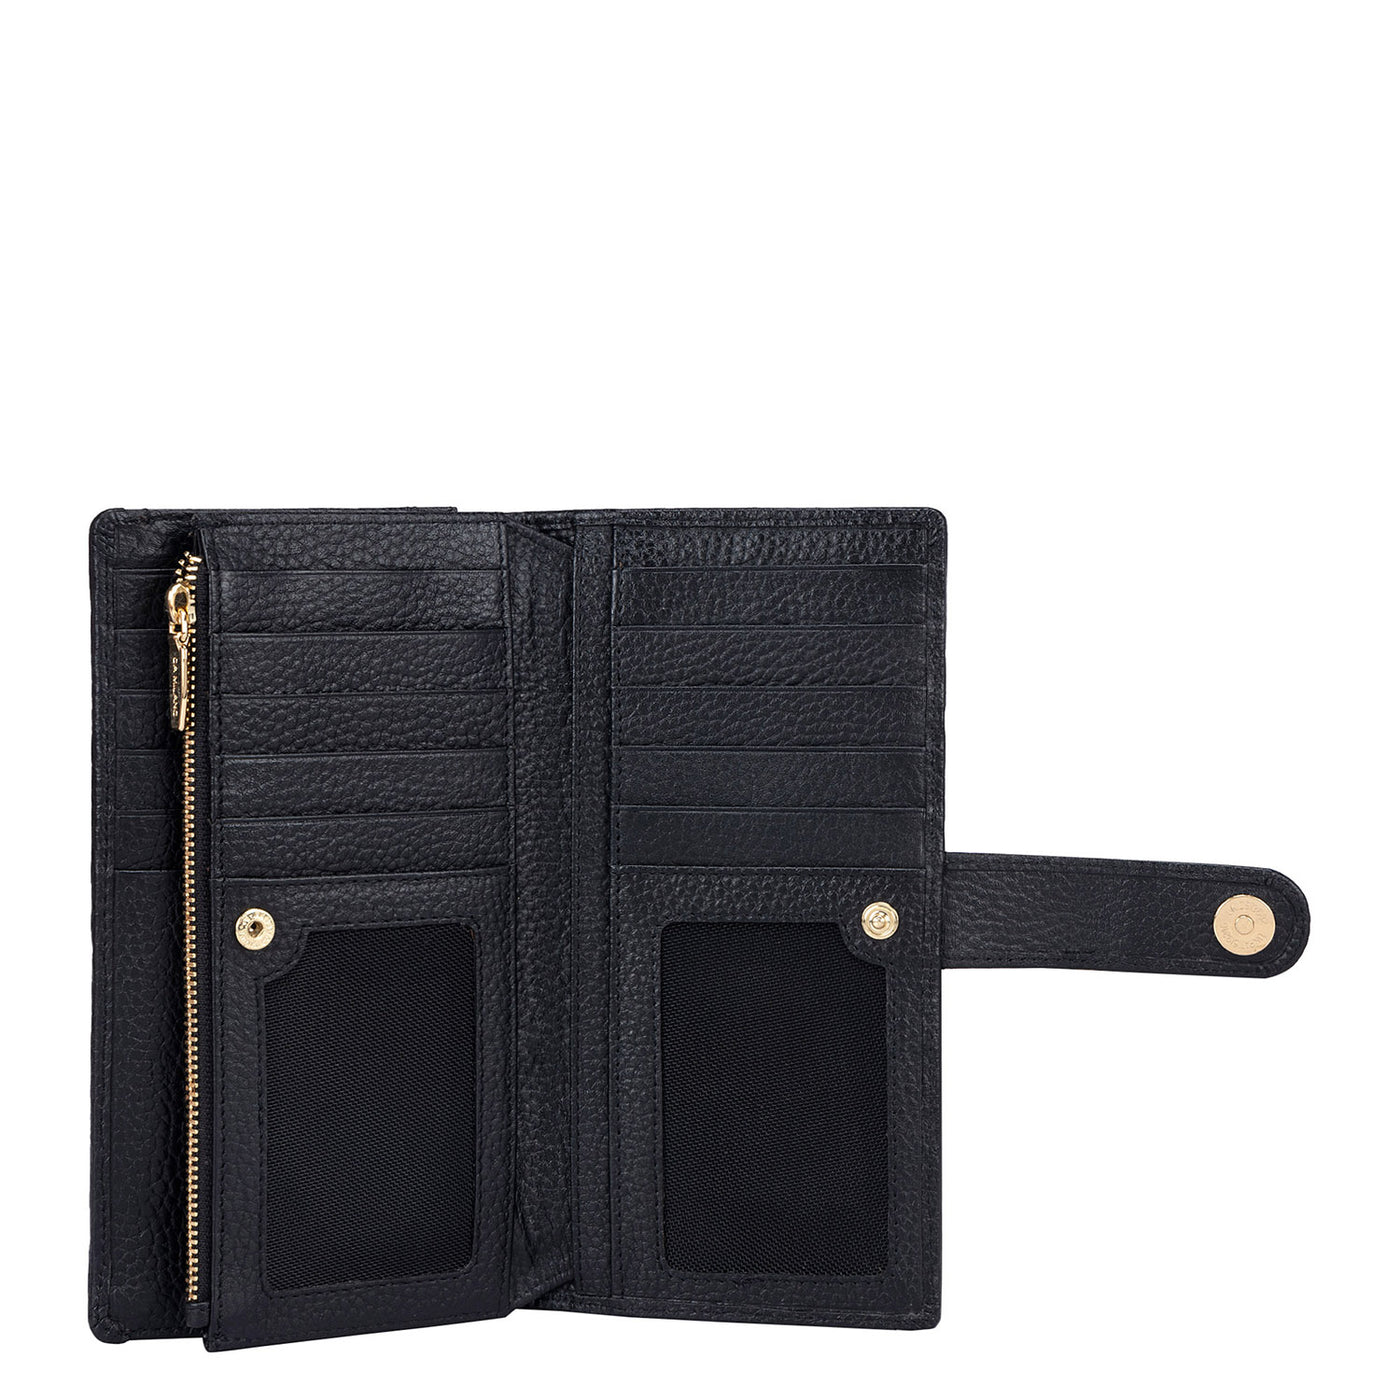 Mat Leather Ladies Wallet - Black